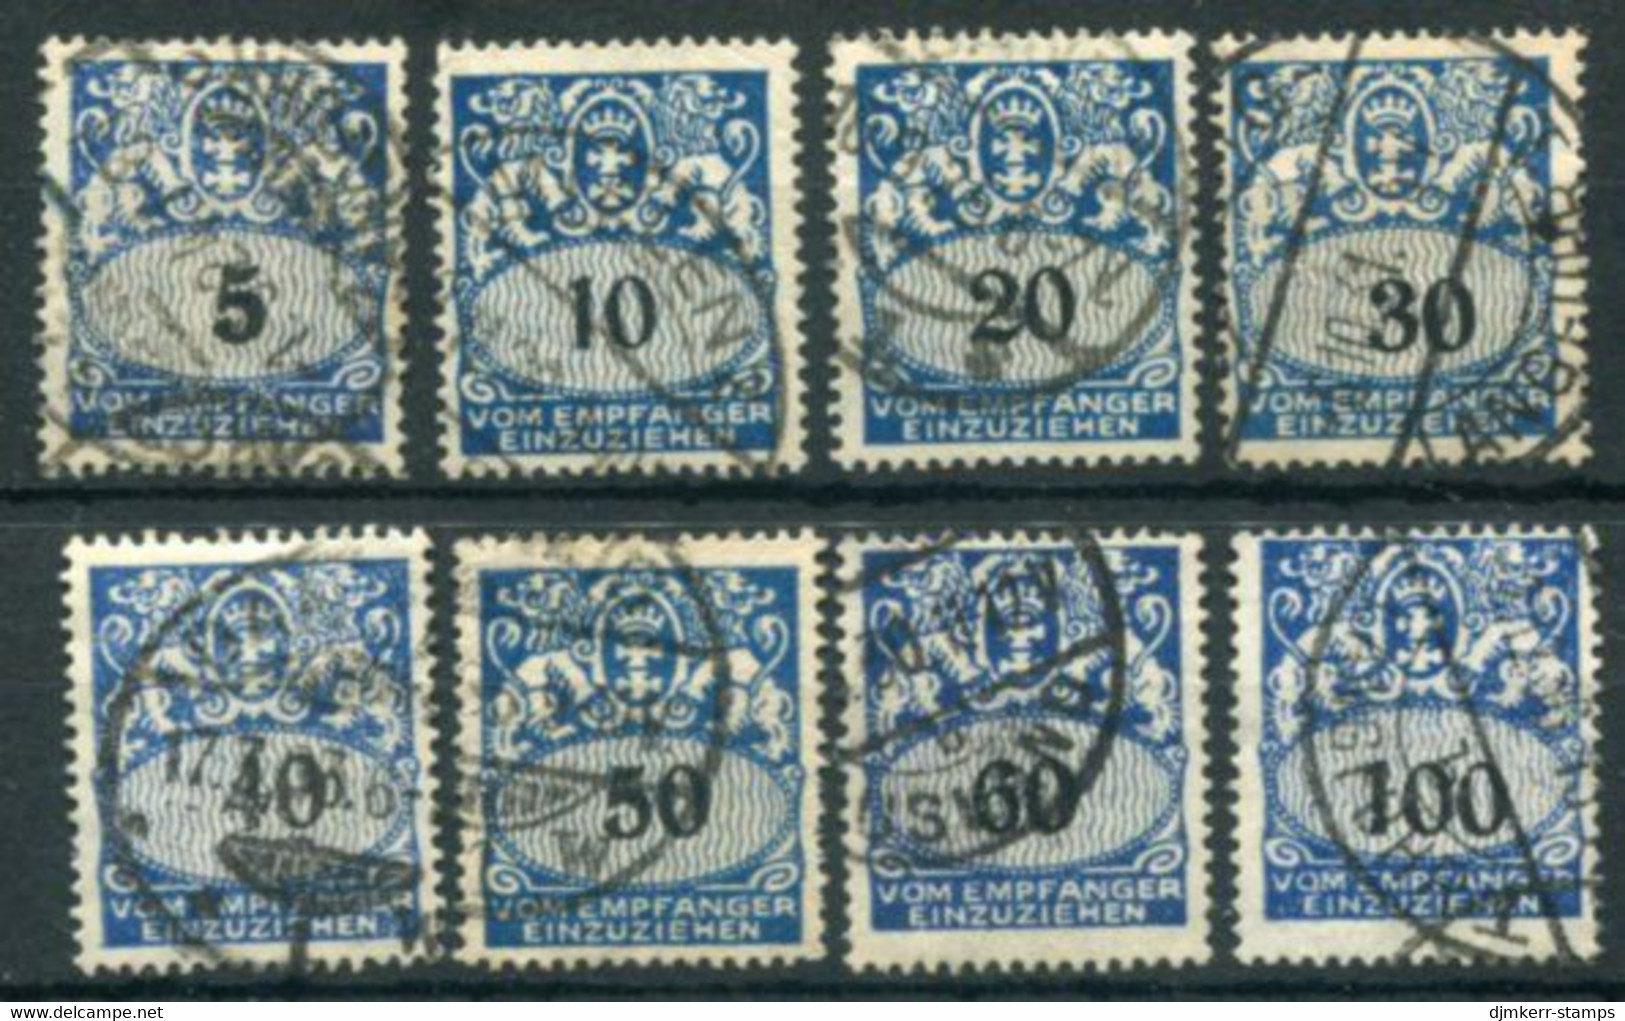 DANZIG 1923 Postage Due Set Of 8 Used.  Michel Porto 30-37 - Postage Due